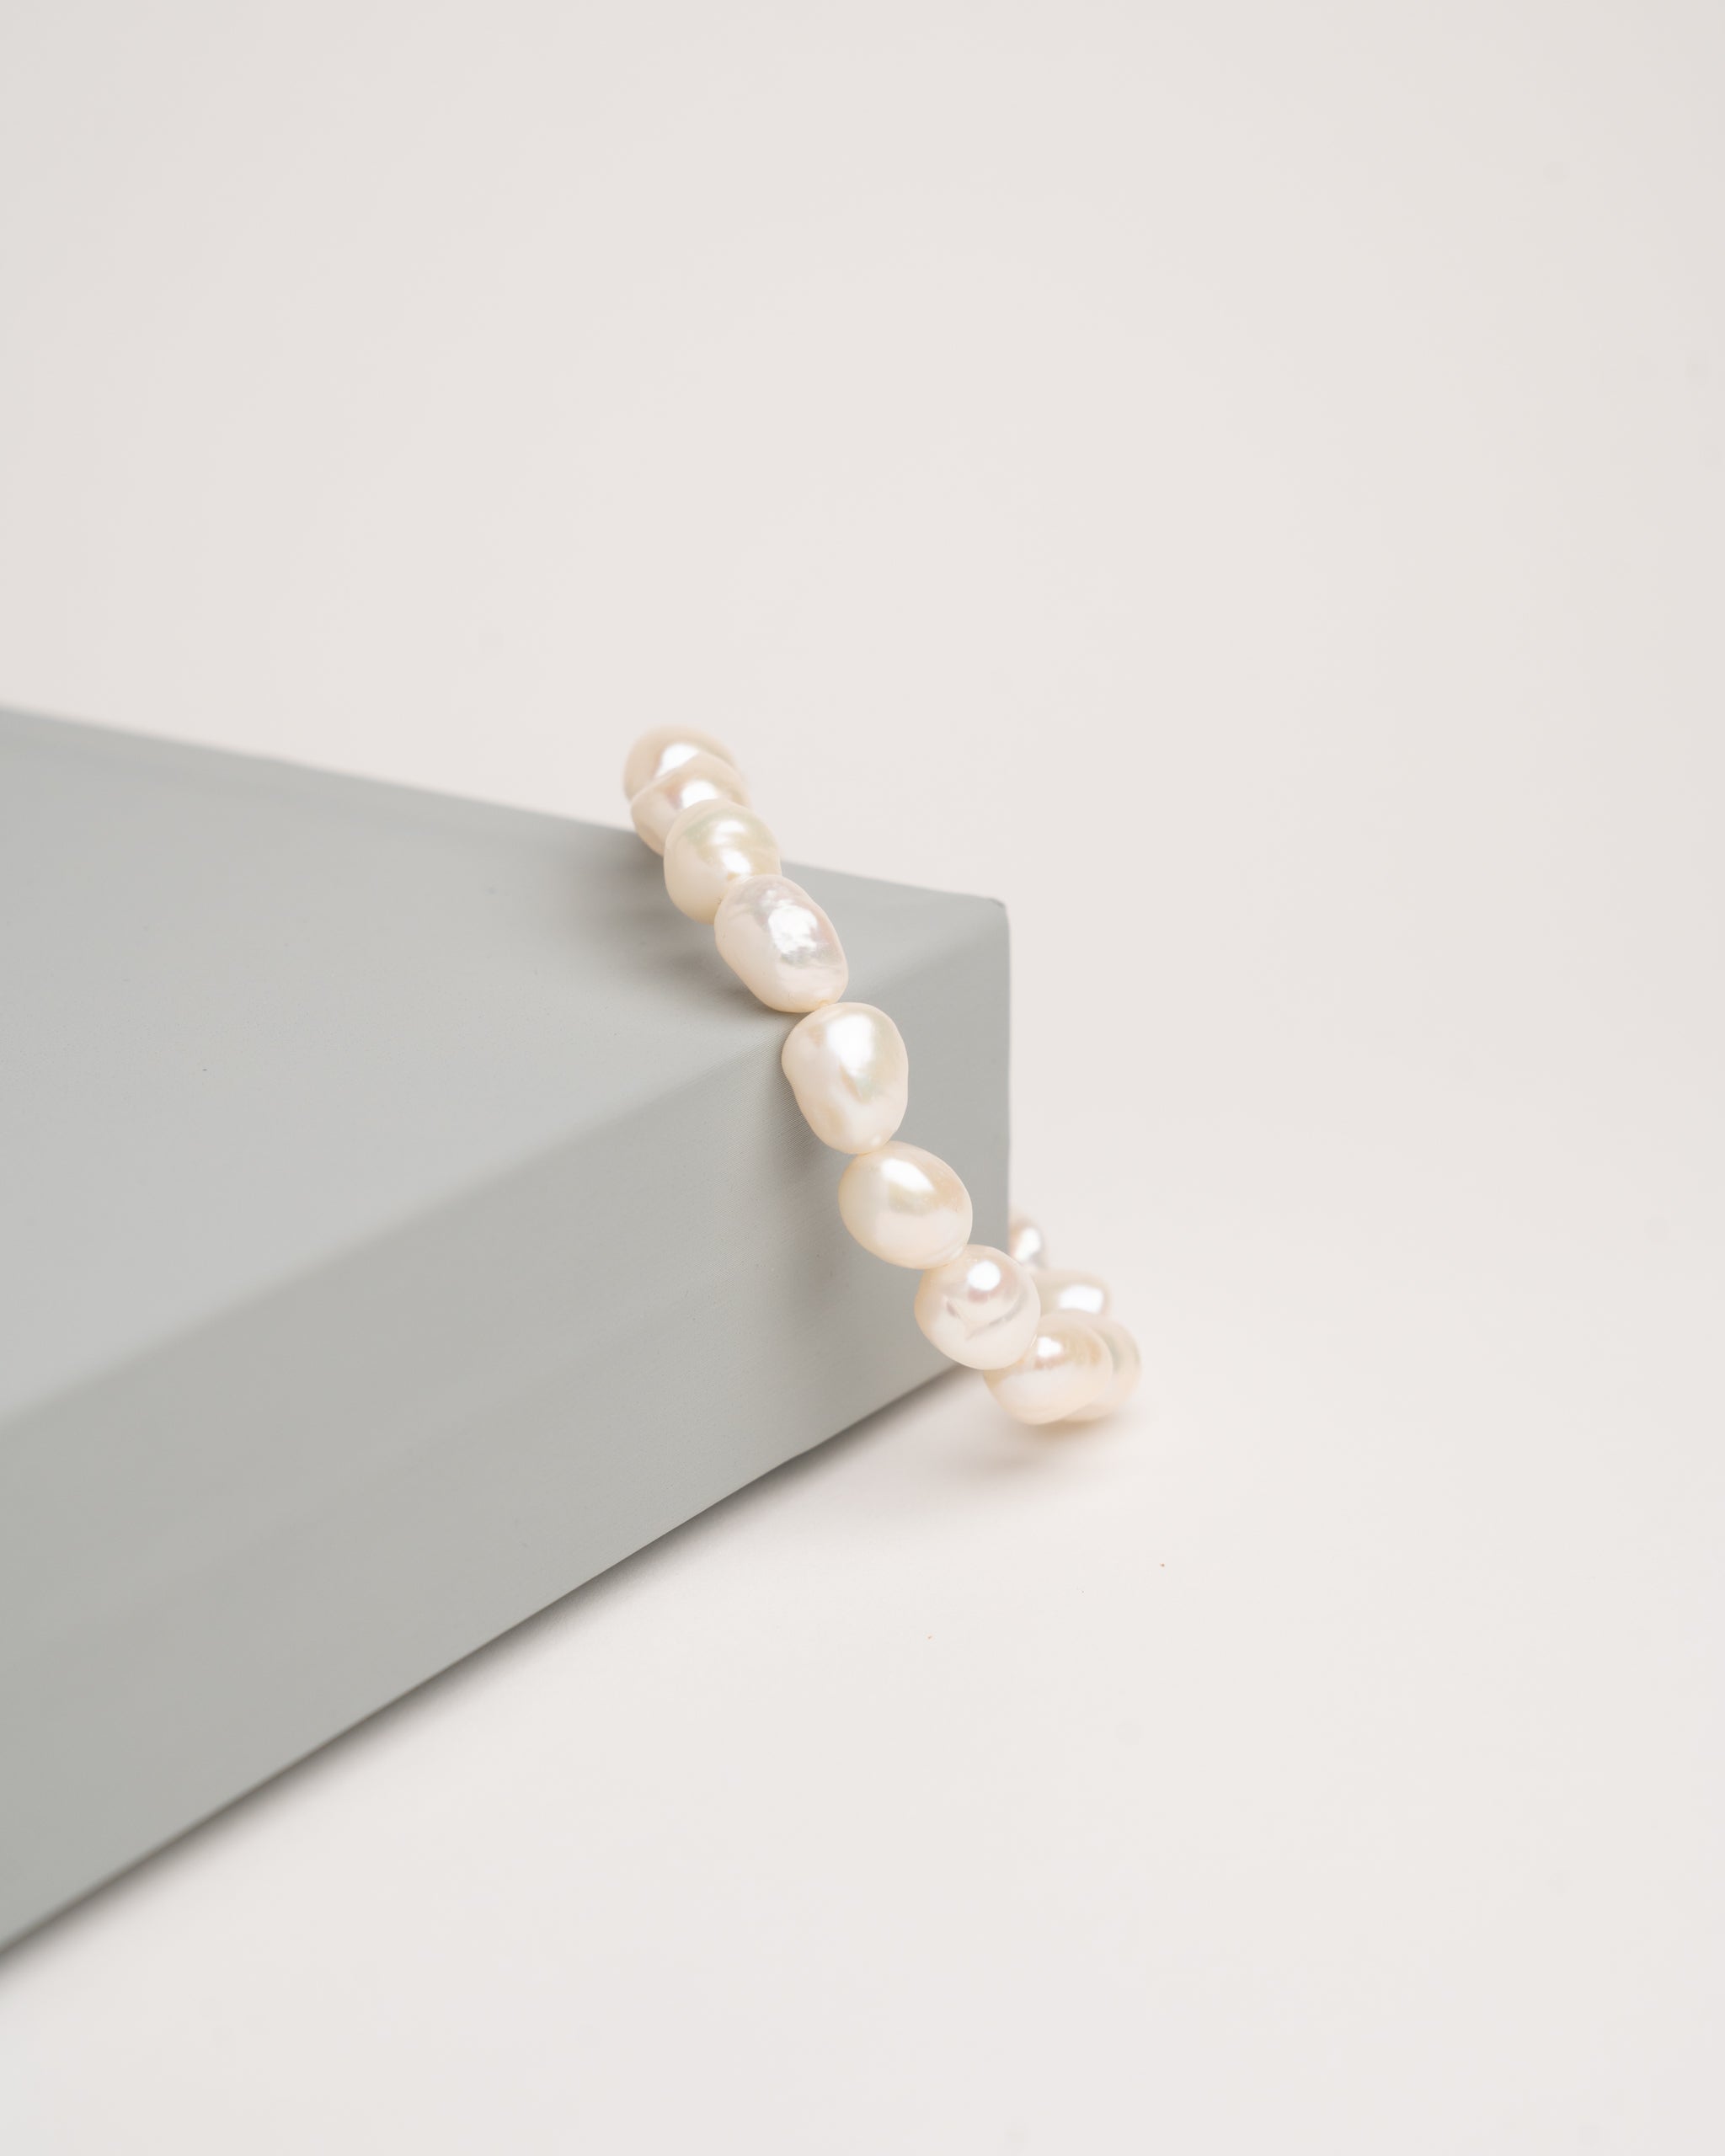 Mujer con pulsera de perlas cultivadas de agua dulce barrocas de 10 a 11 mm